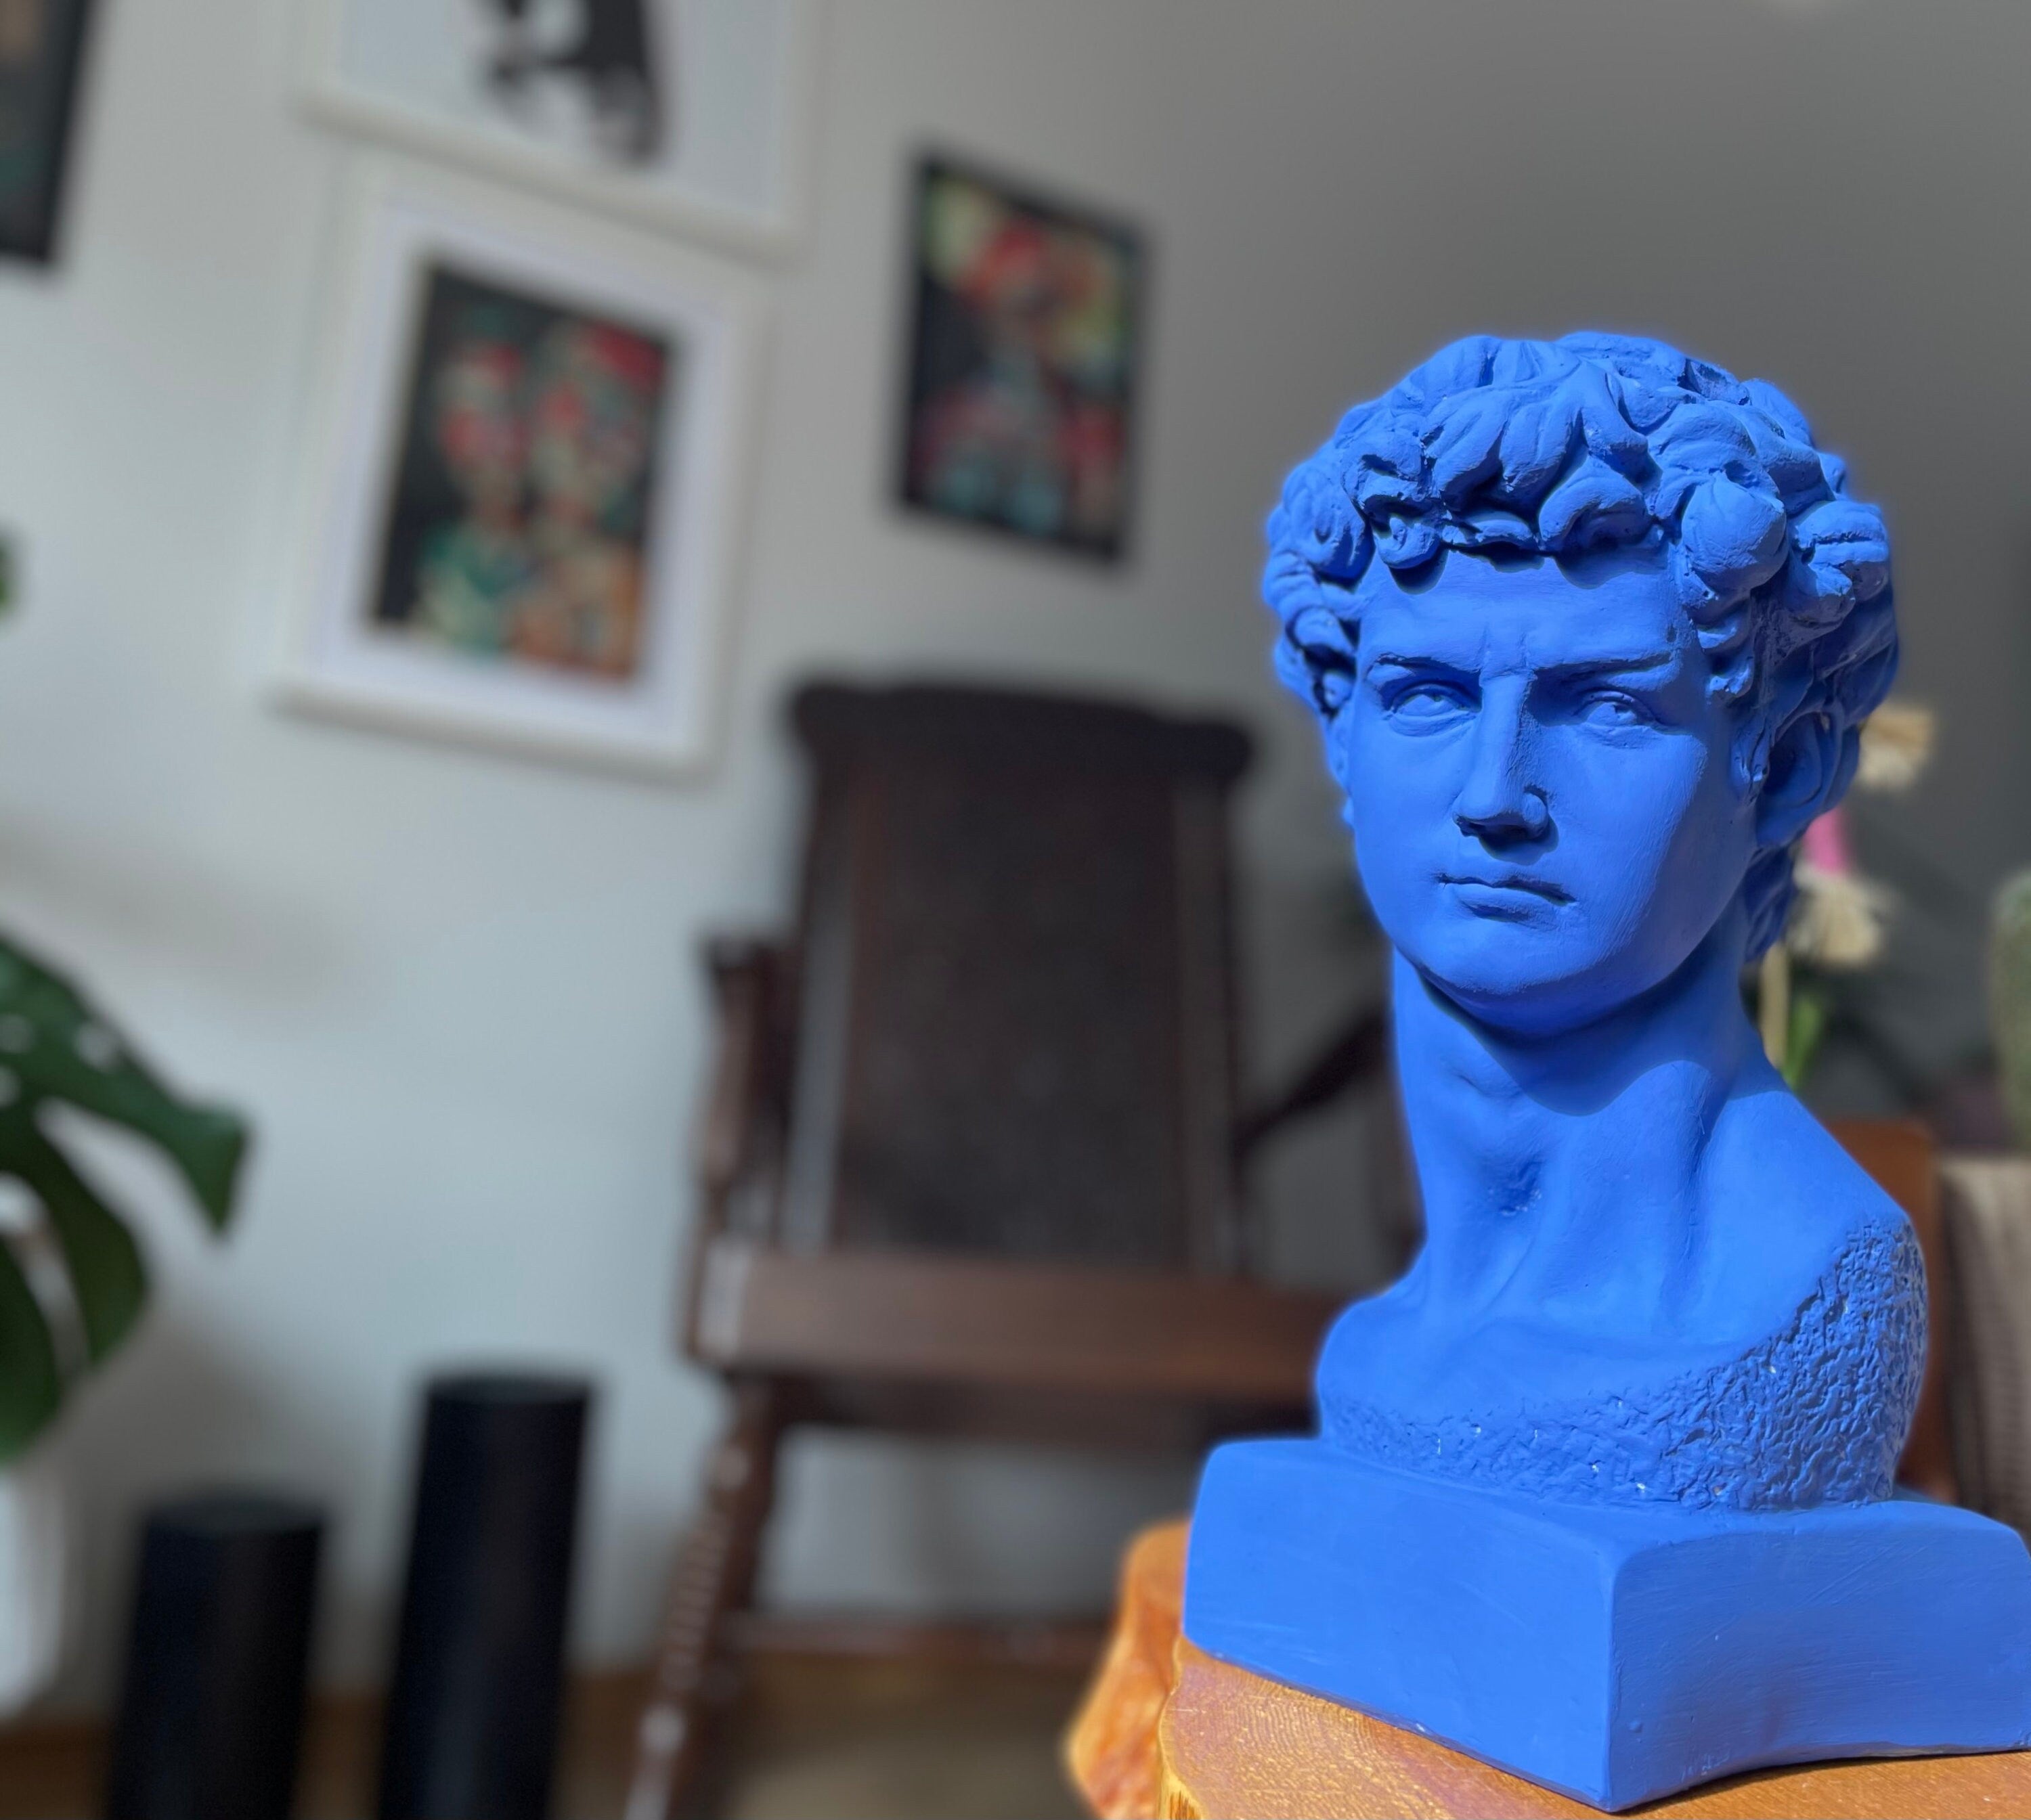 Ethereal Elegance: Large Night Blue David Bust Sculpture